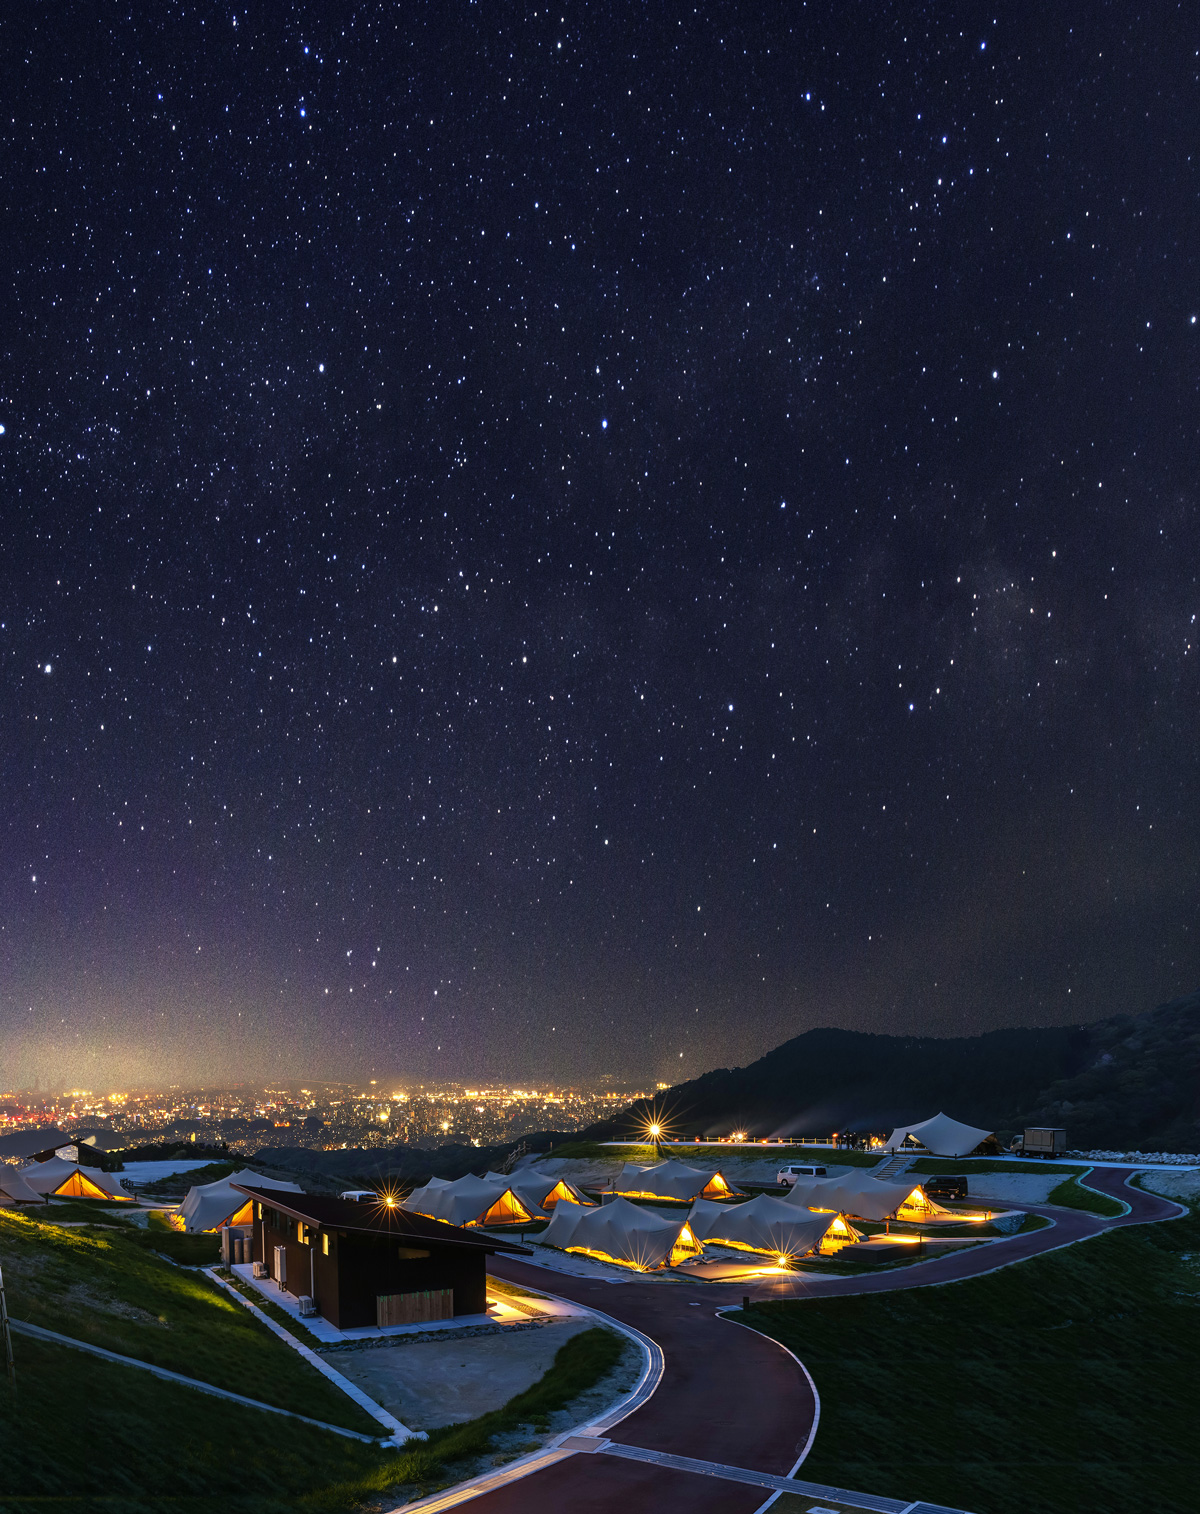 「Snow Peak YAKEI SUITE」中的「YAKEI」在日語中是夜景的意思，在此處旅客可以盡情沉浸在大自然中，坐擁美麗的星空、月夜。（圖片來源：Snow Peak YAKEI SUITE提供）